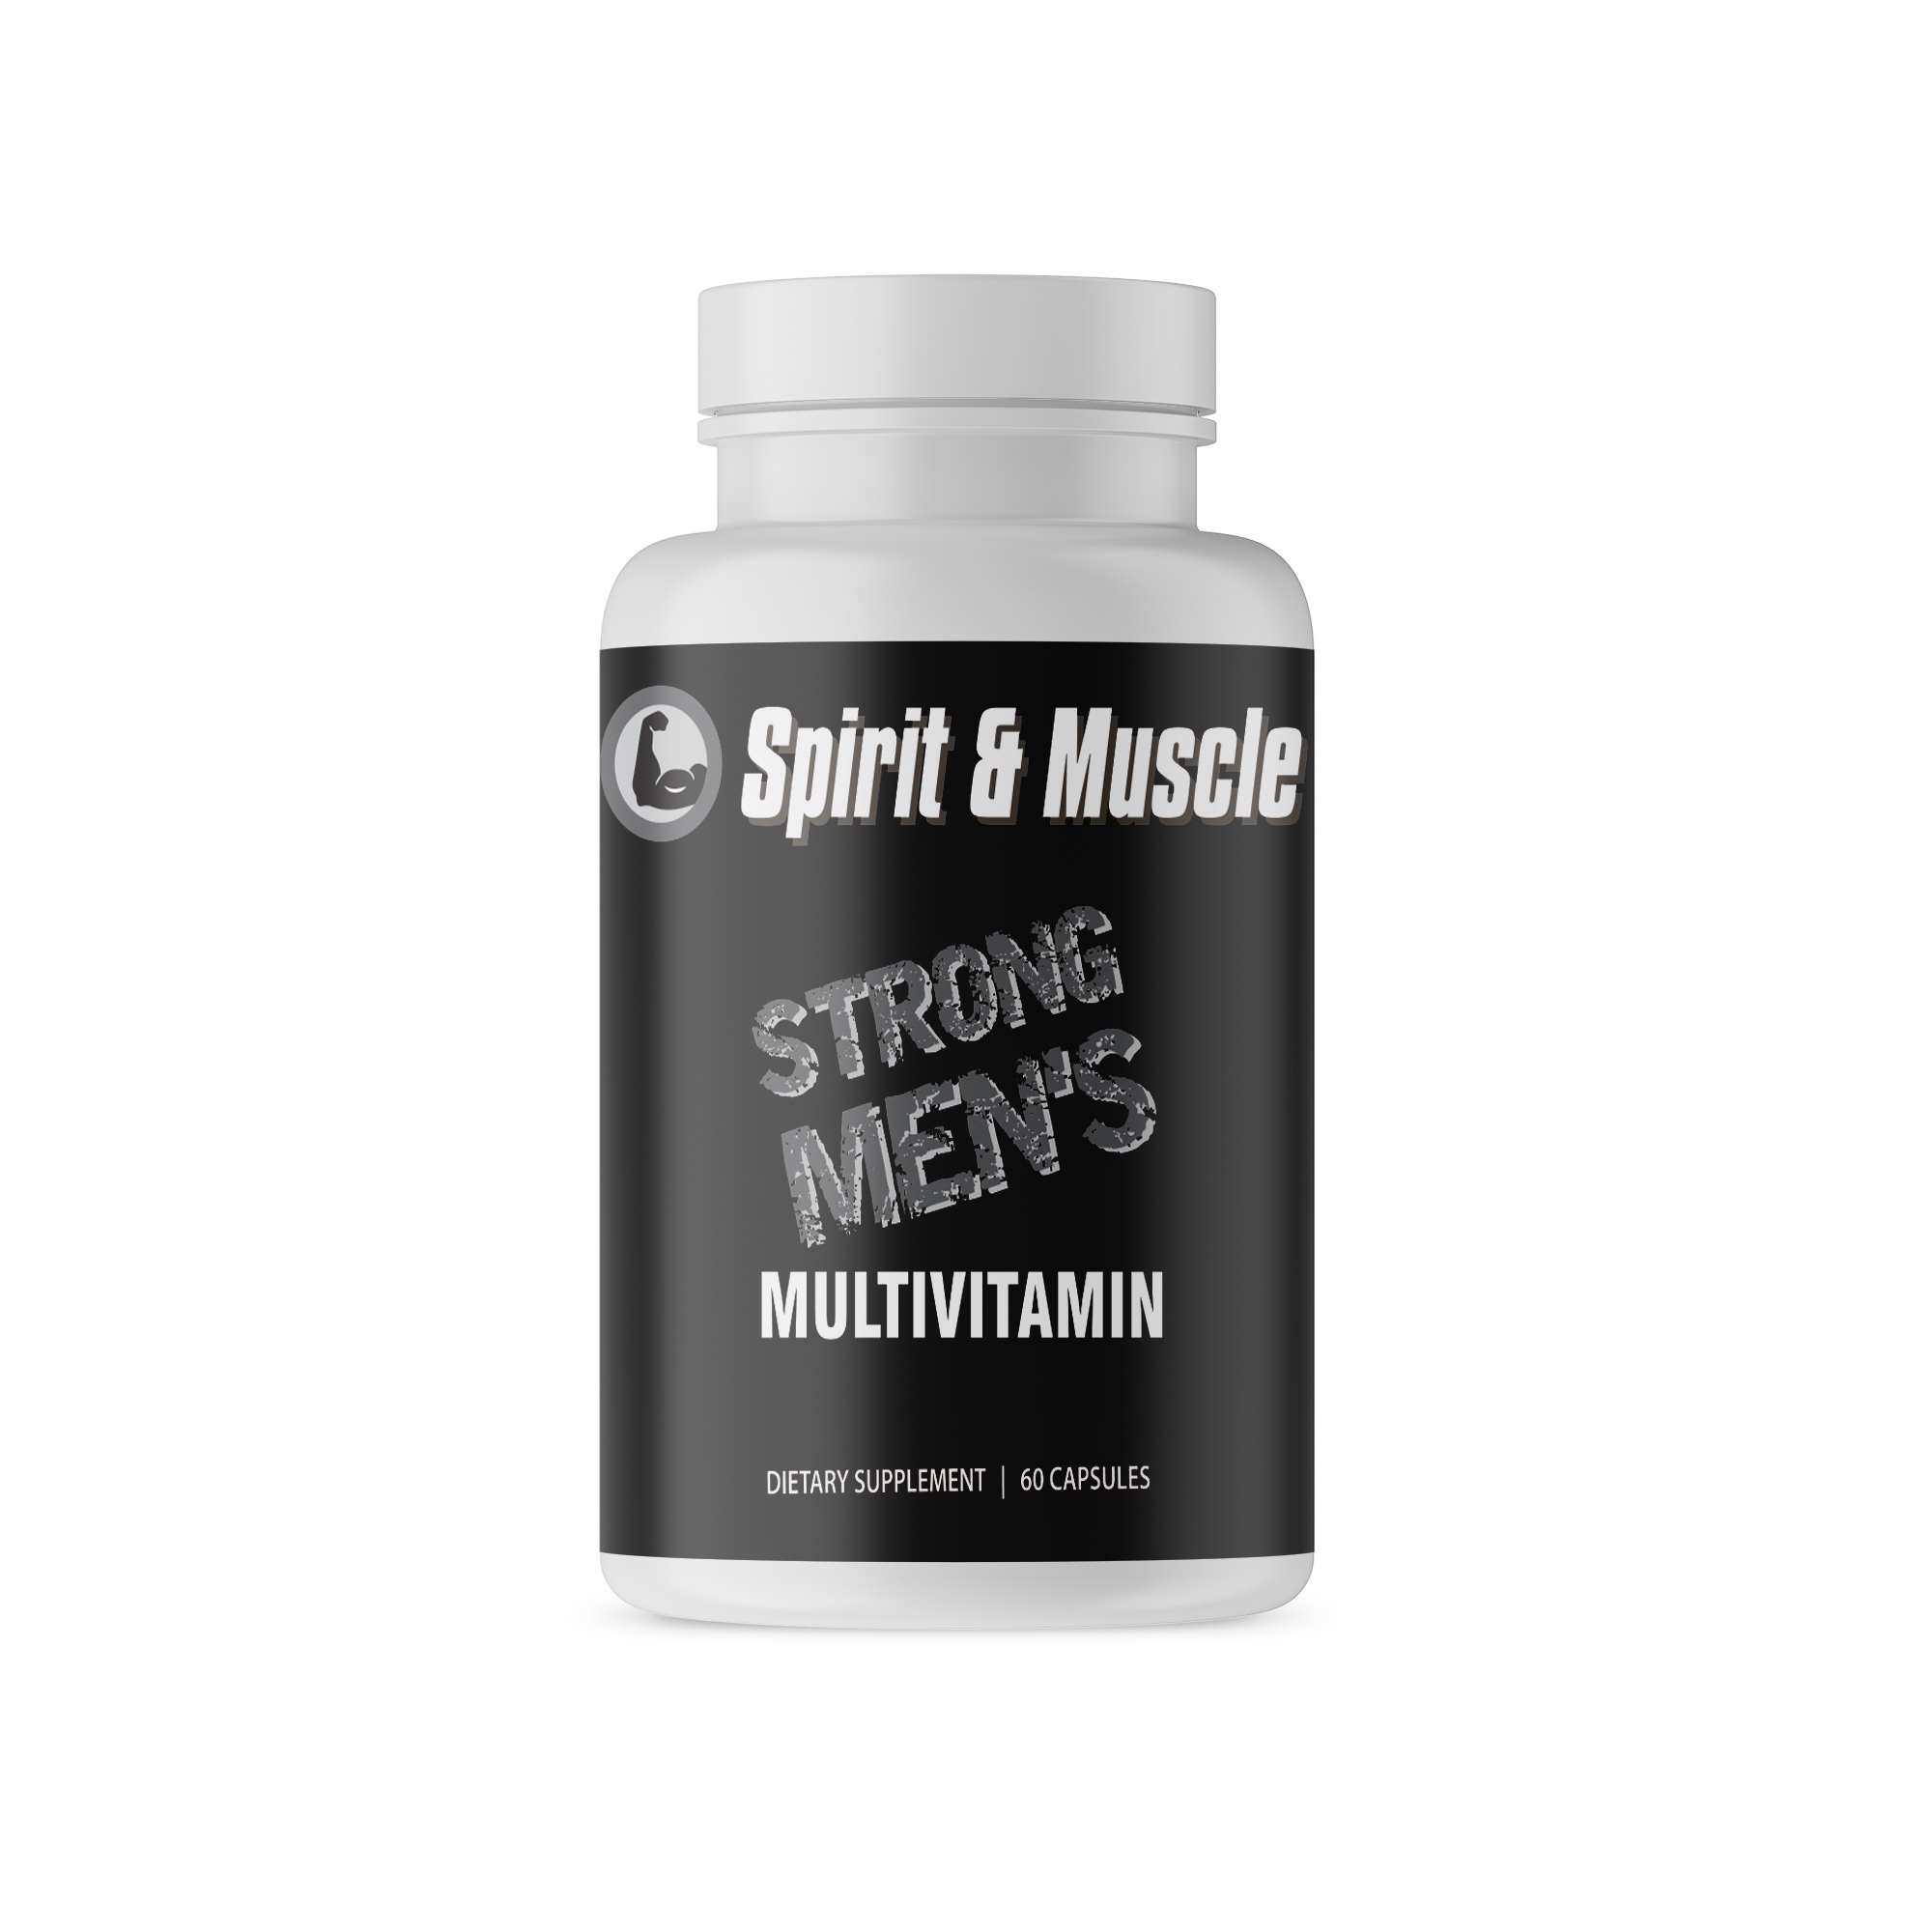 Strong Men's Complete Multivitamin